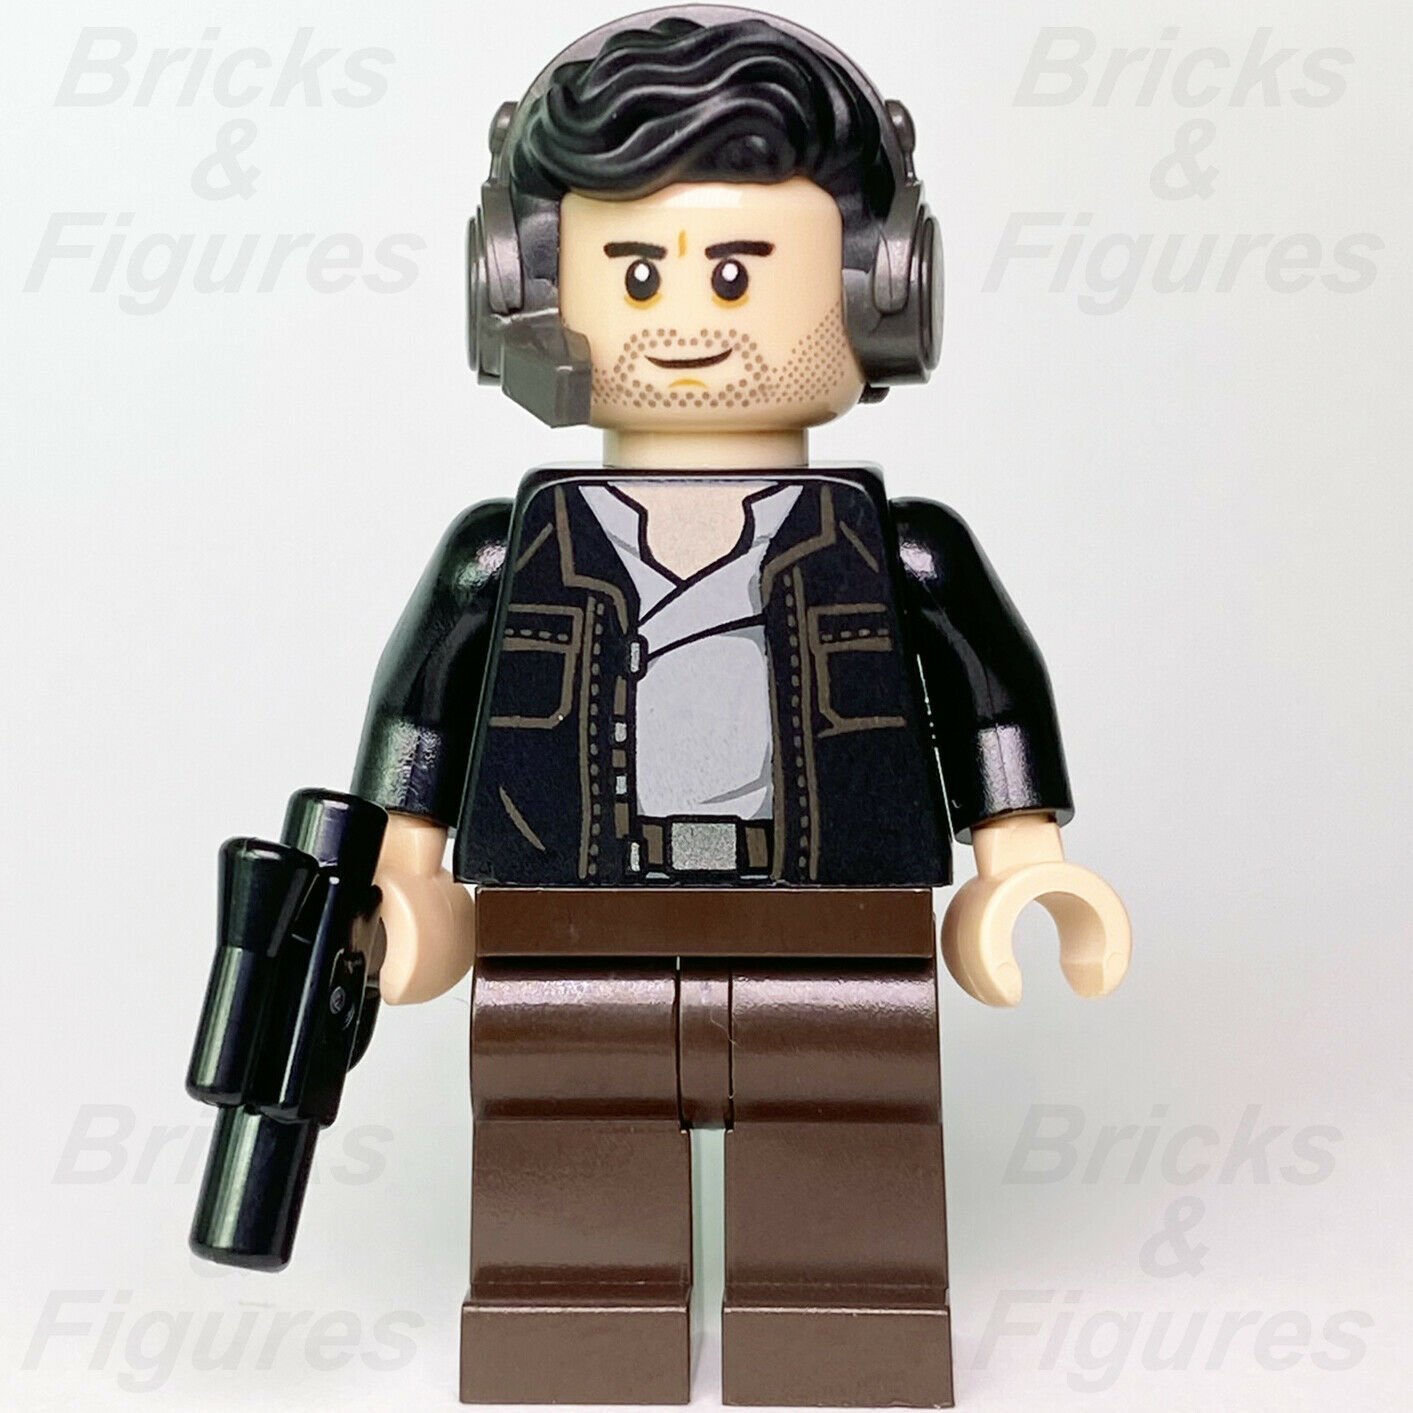 Star Wars LEGO Captain Poe Dameron with Headset The Last Jedi Minifigure 75202 - Bricks & Figures